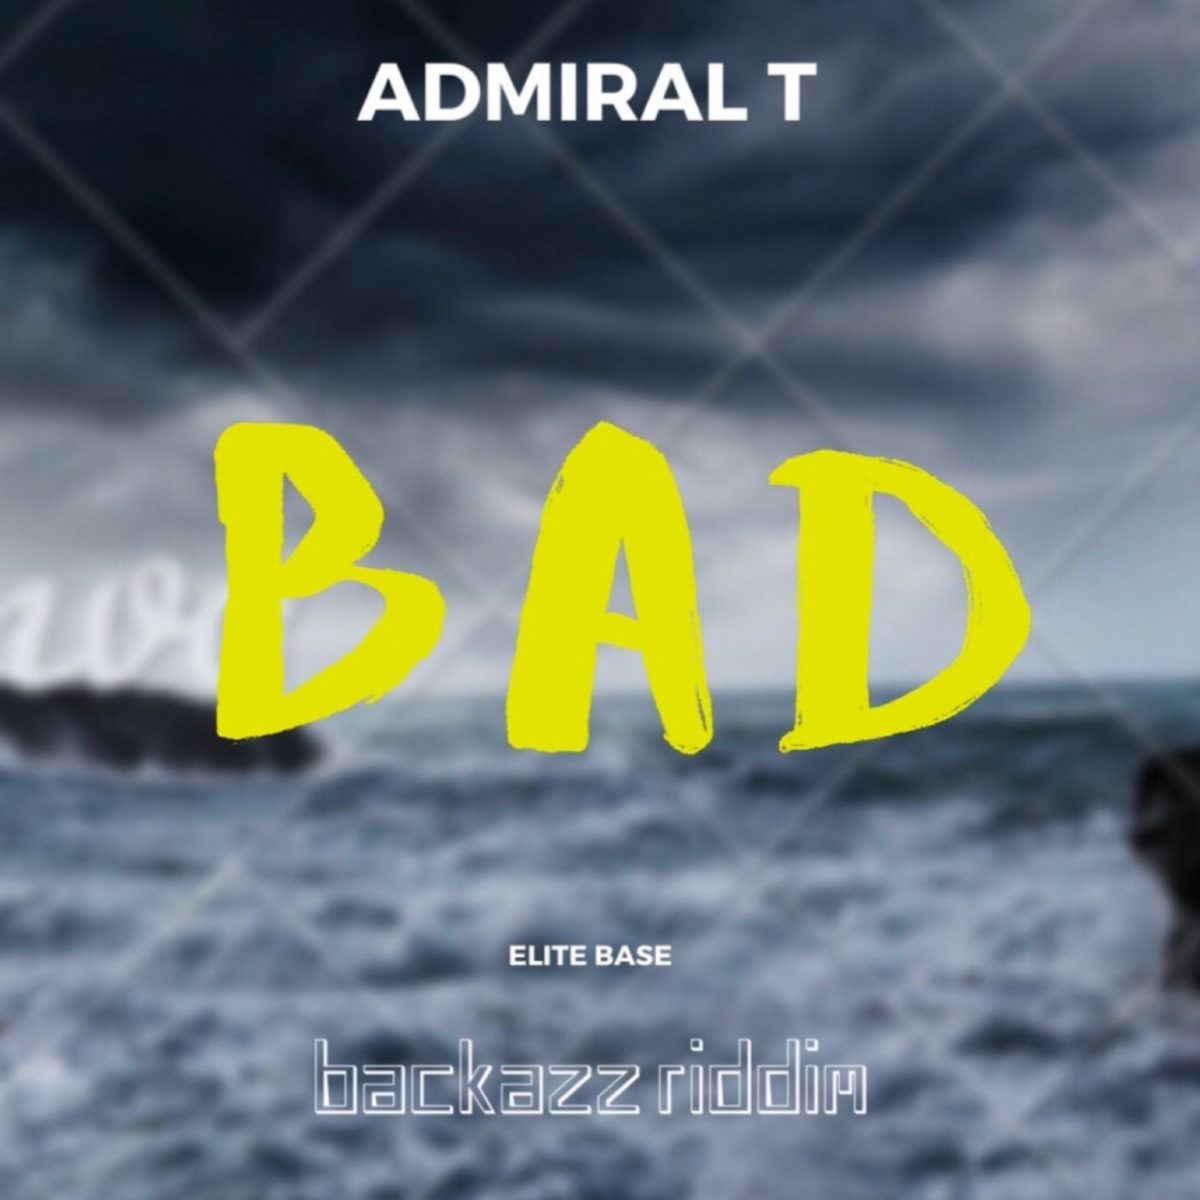 Admiral T - Bad (Backazz Riddim) (Cover)